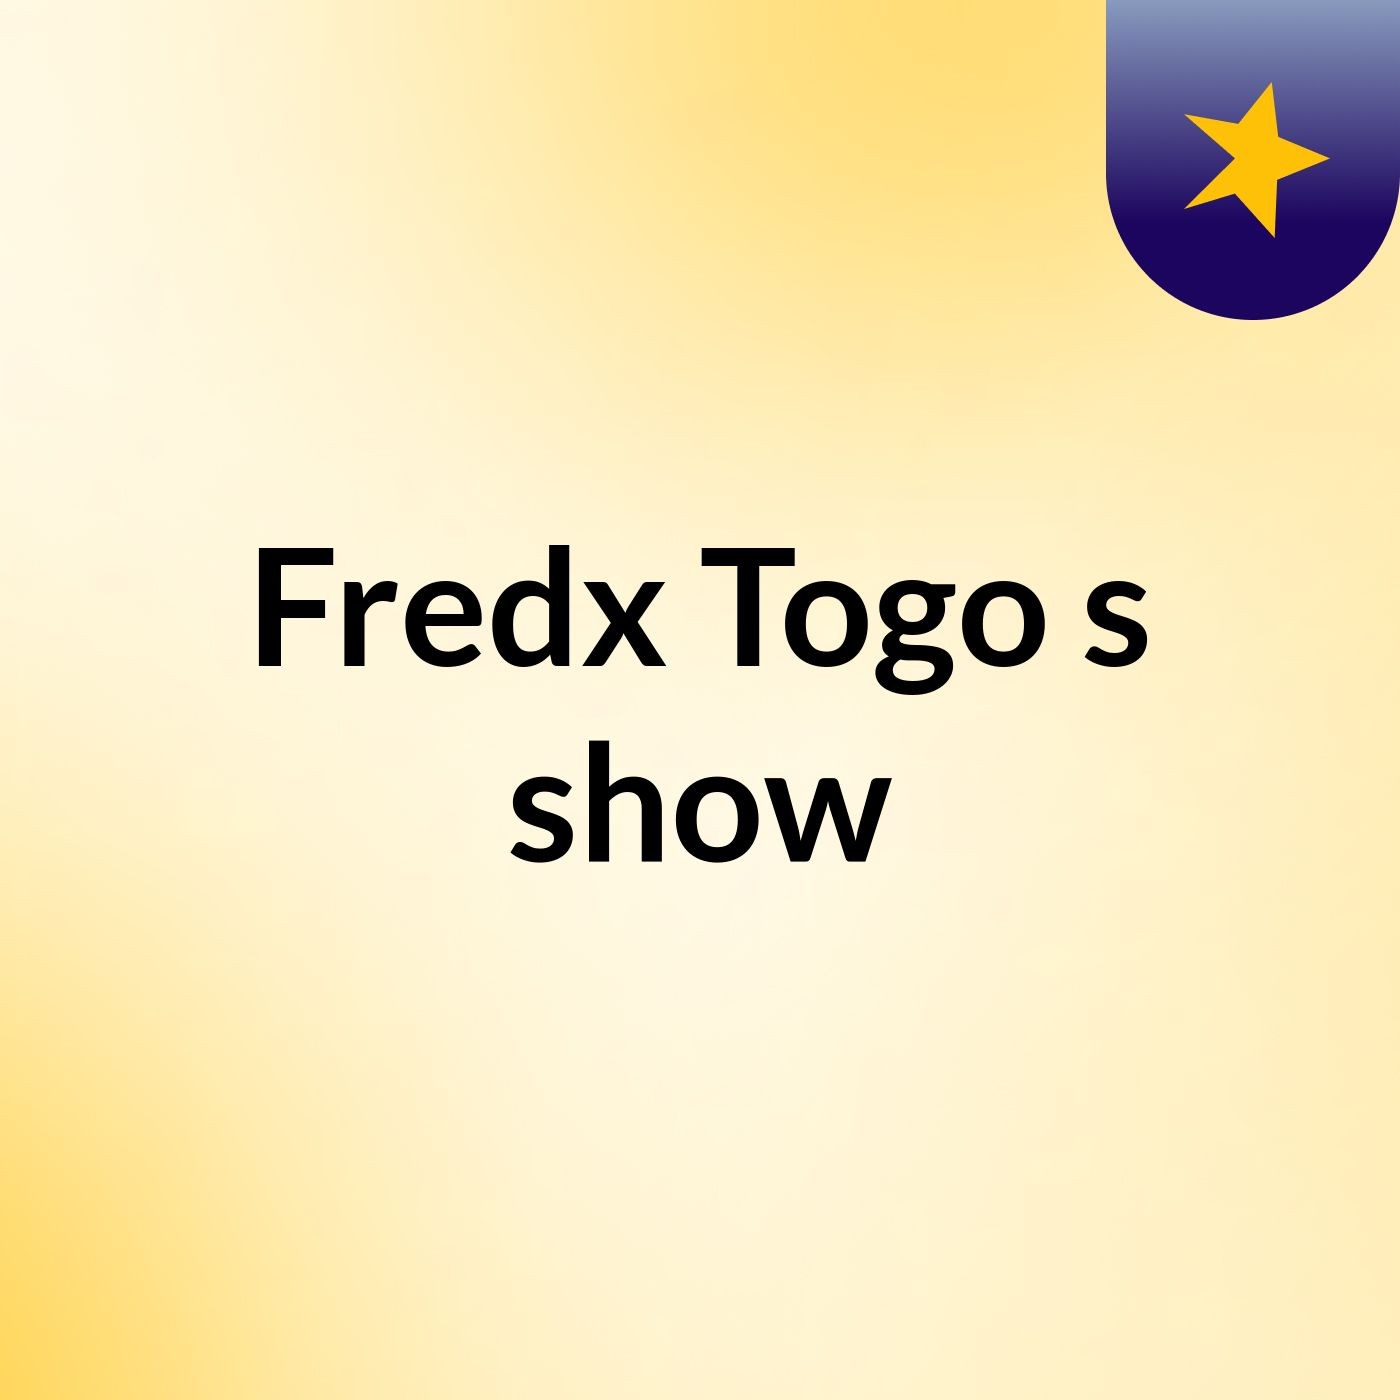 Fredx Togo's show